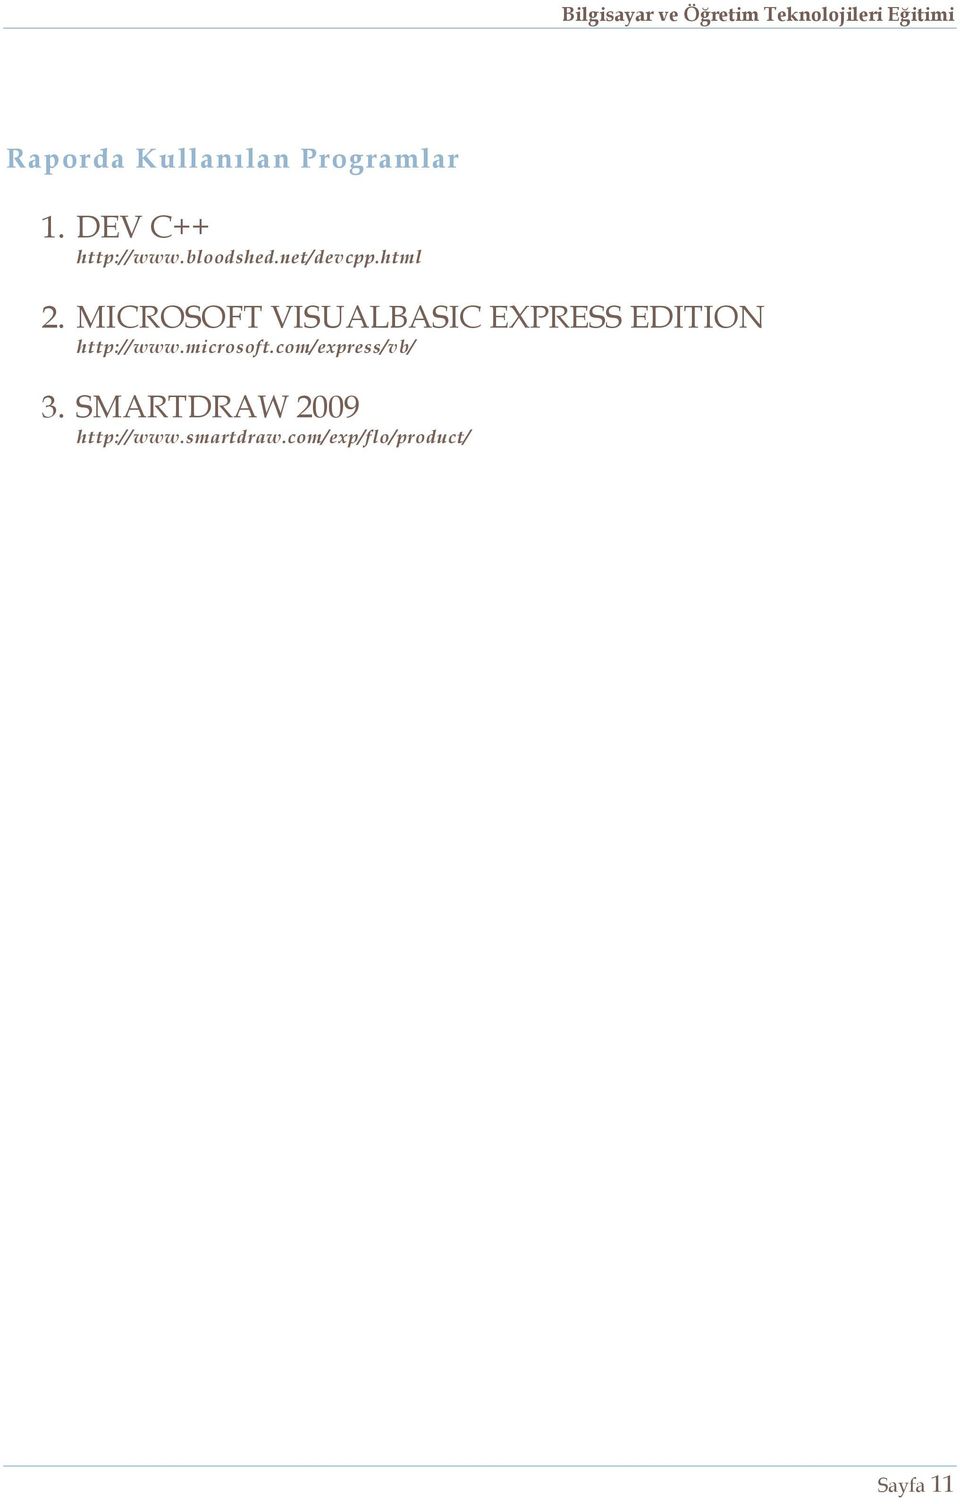 MICROSOFT VISUALBASIC EXPRESS EDITION http://www.